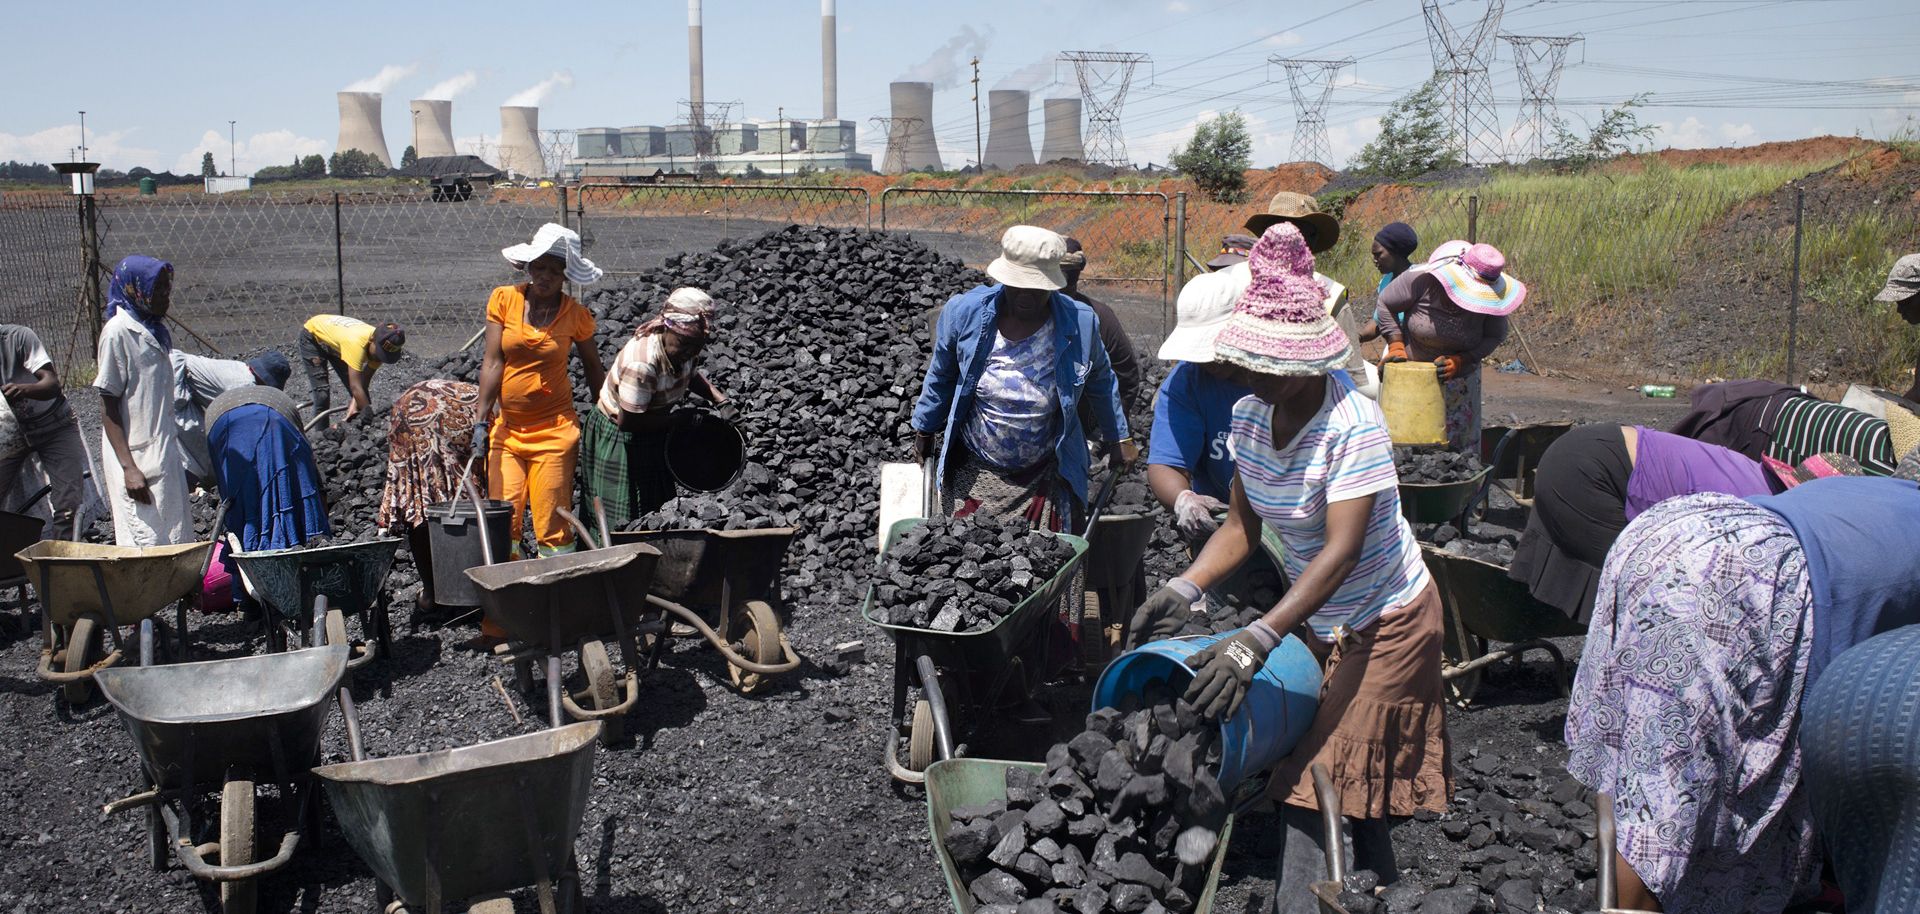 South Africa Seeks Mining Reform